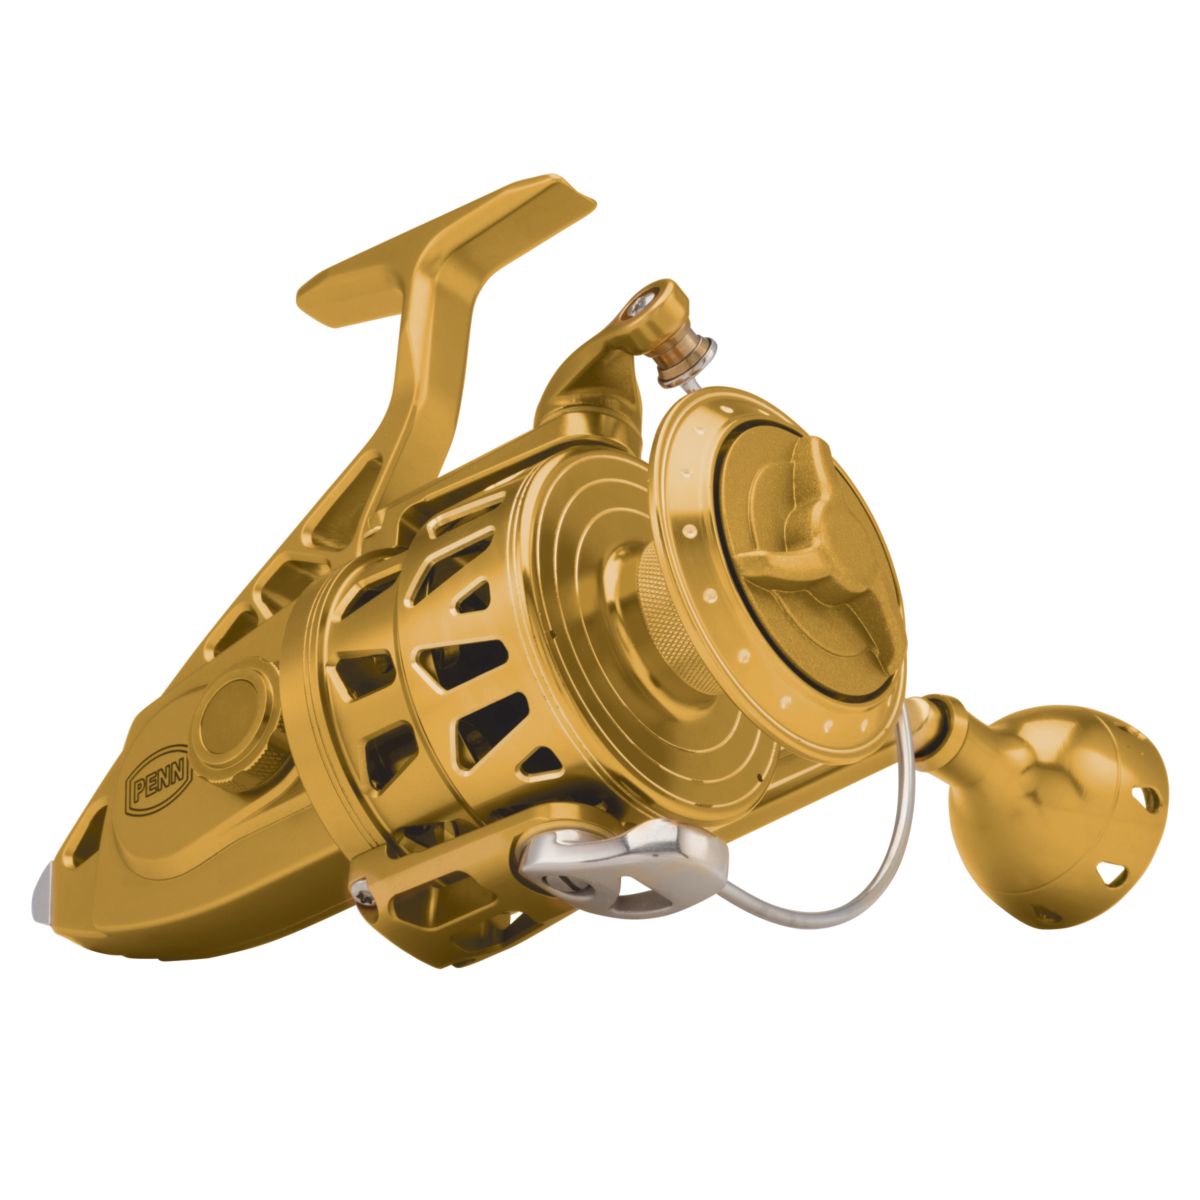 Penn TRQII7500-G Gold Torque II Spinning Reel